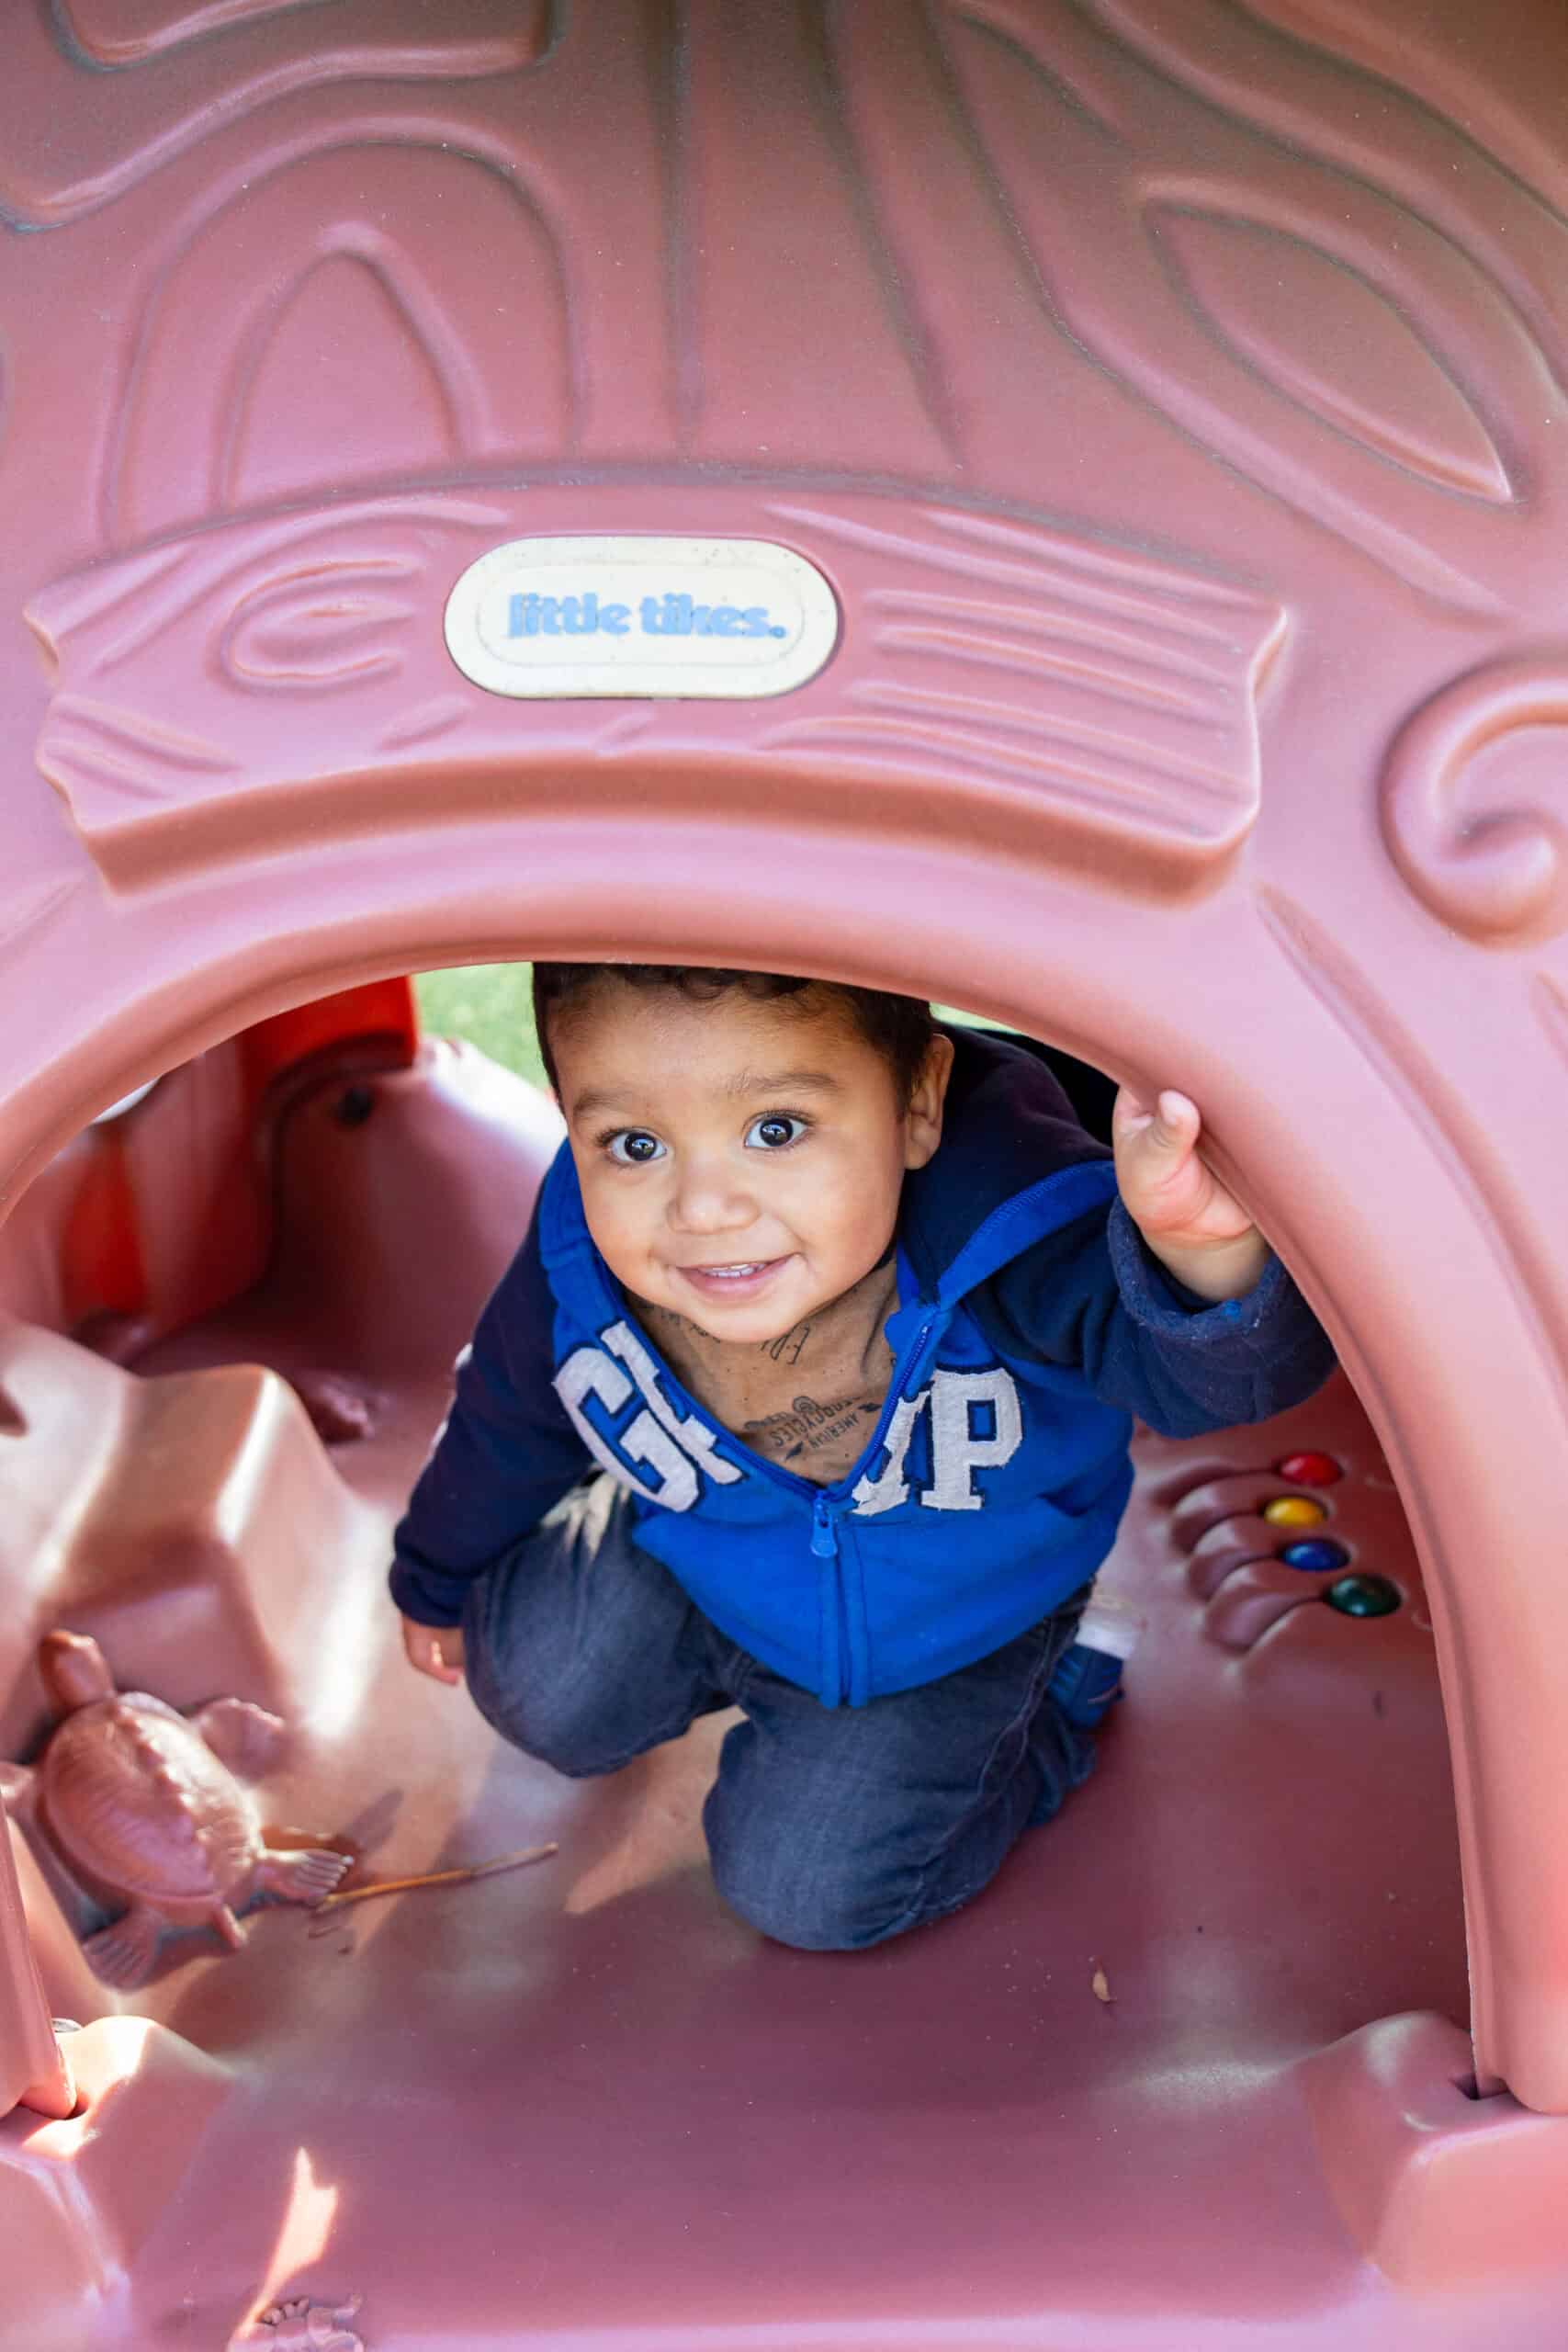 Child on playground smiling at camera